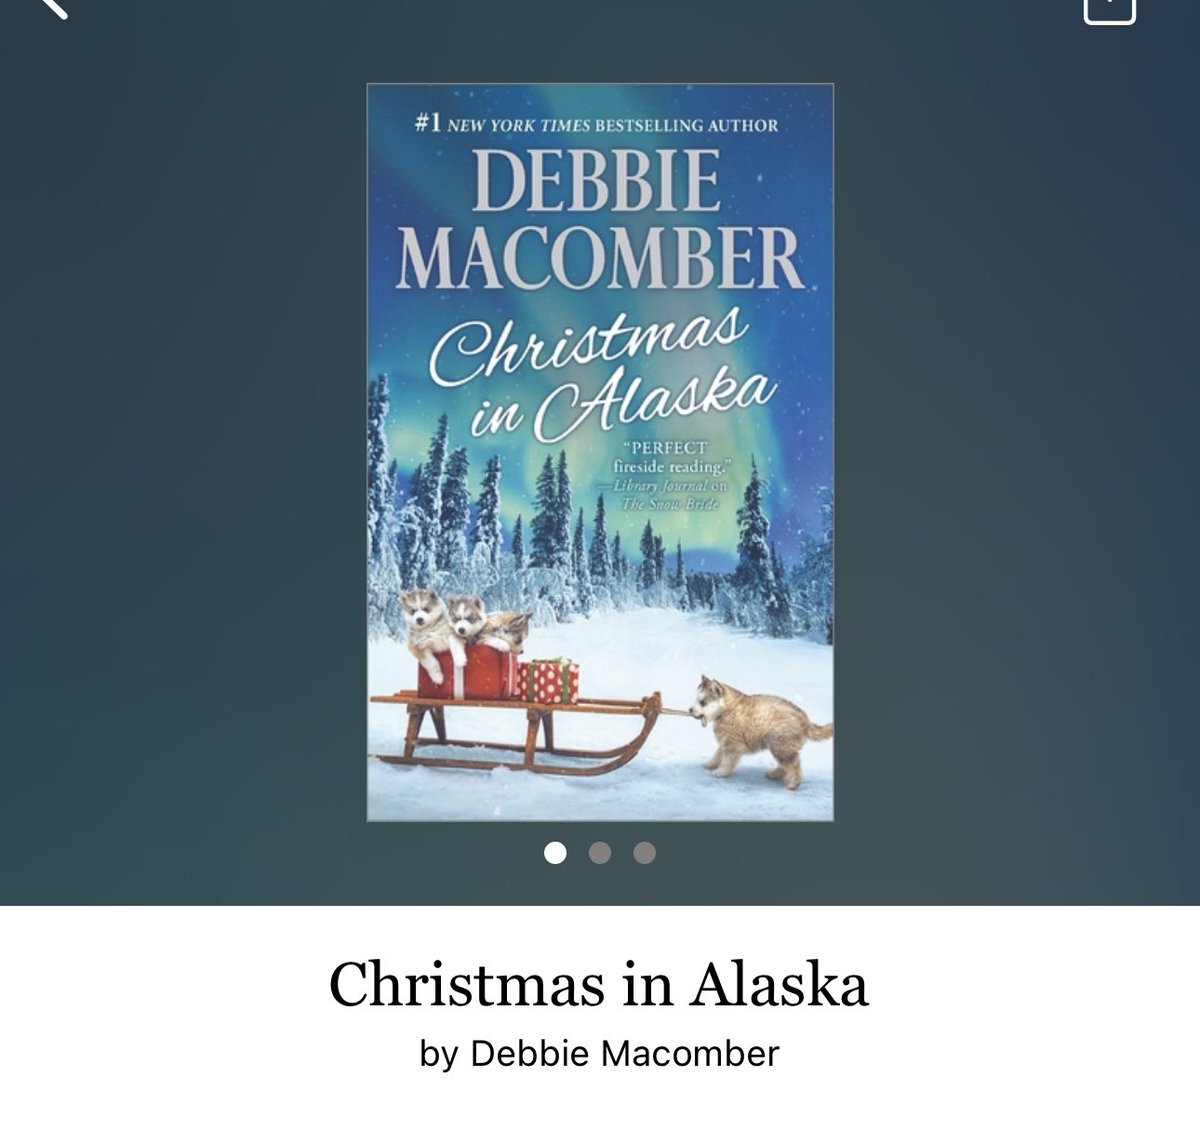 Christmas in Alaska by Debbie Macomber 

#ChristmasInAlaska by #DebbieMacomber #5442 #378pages #september2023 #985of400 #mailOrderBride #TheSnowBride #PaulAndCarolina #ReidAndJenna #clearingoffreadingshelves #whatsnext #readitquick